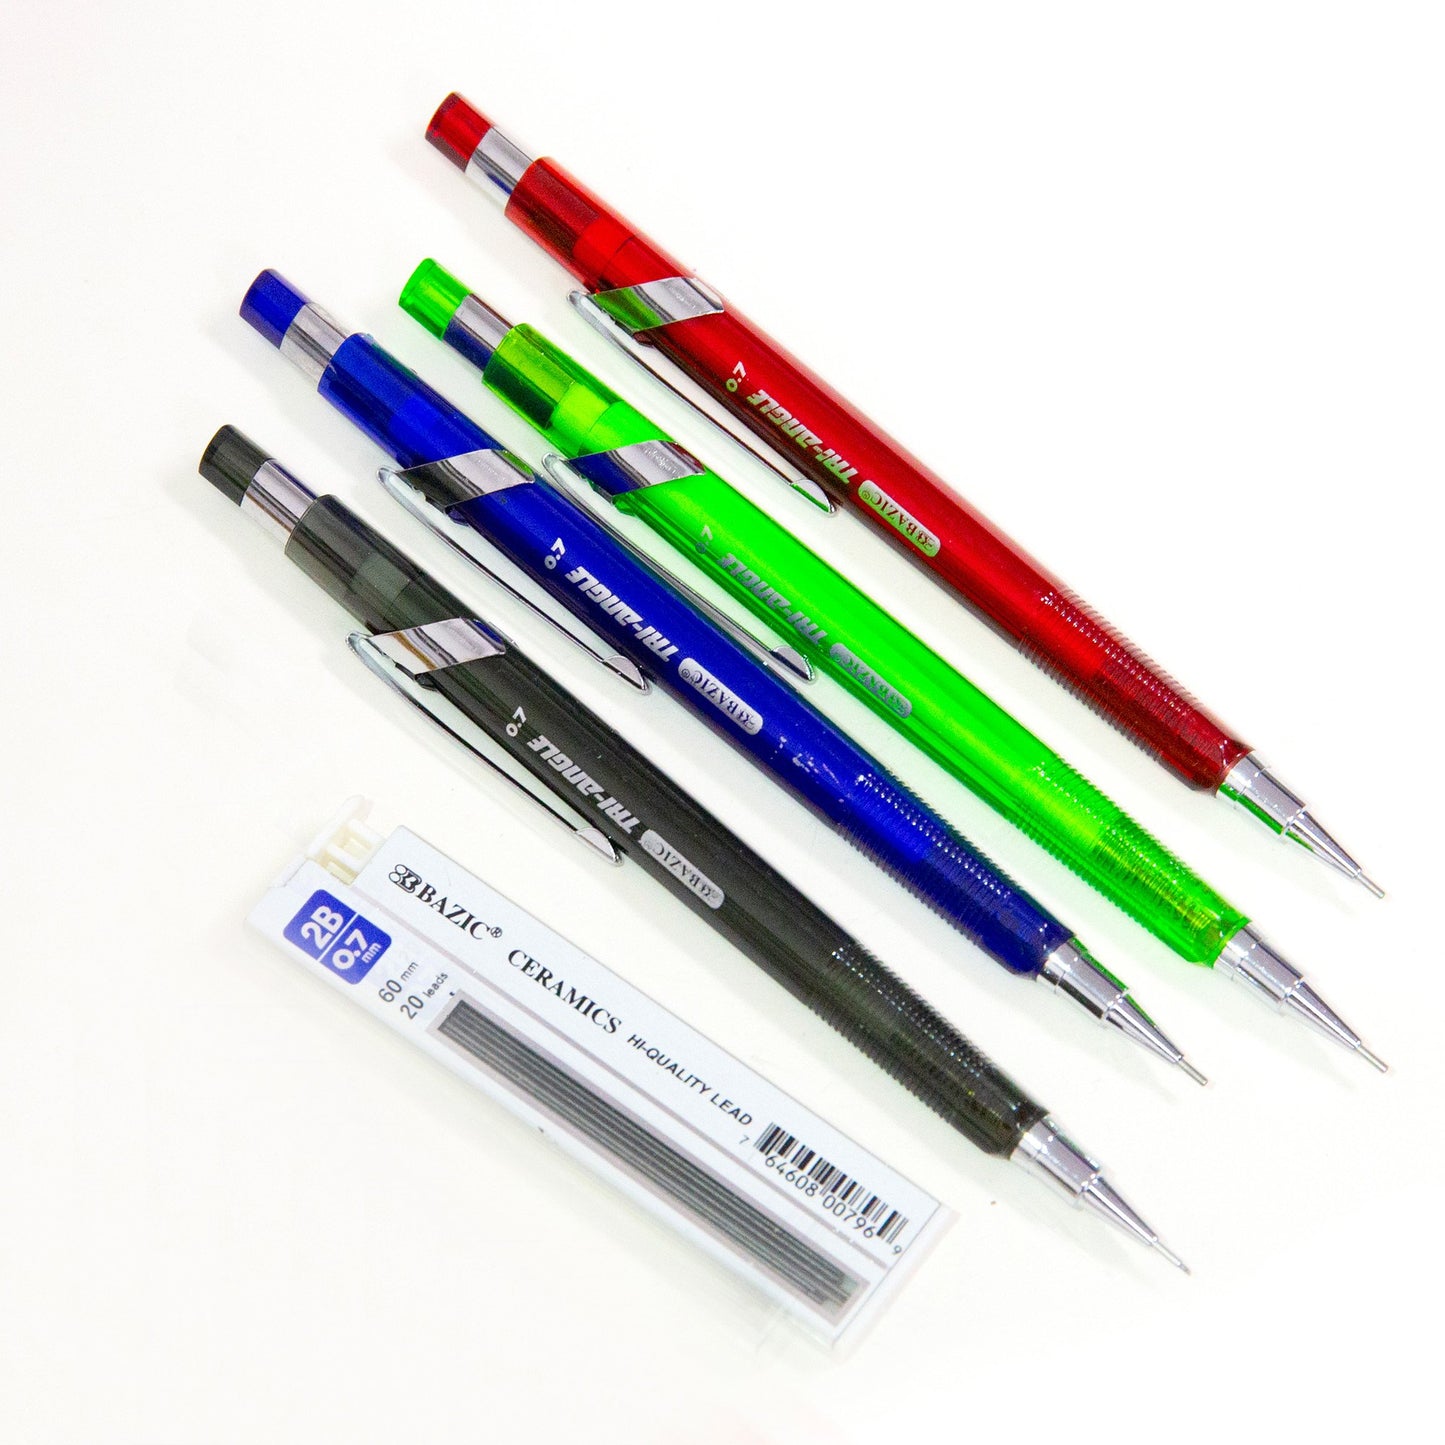 BAZIC Mechanical Pencil 0.7mm Triangle Soft Grip, Refill 2B Ceramic Lead, Latex Free Eraser - Random Color